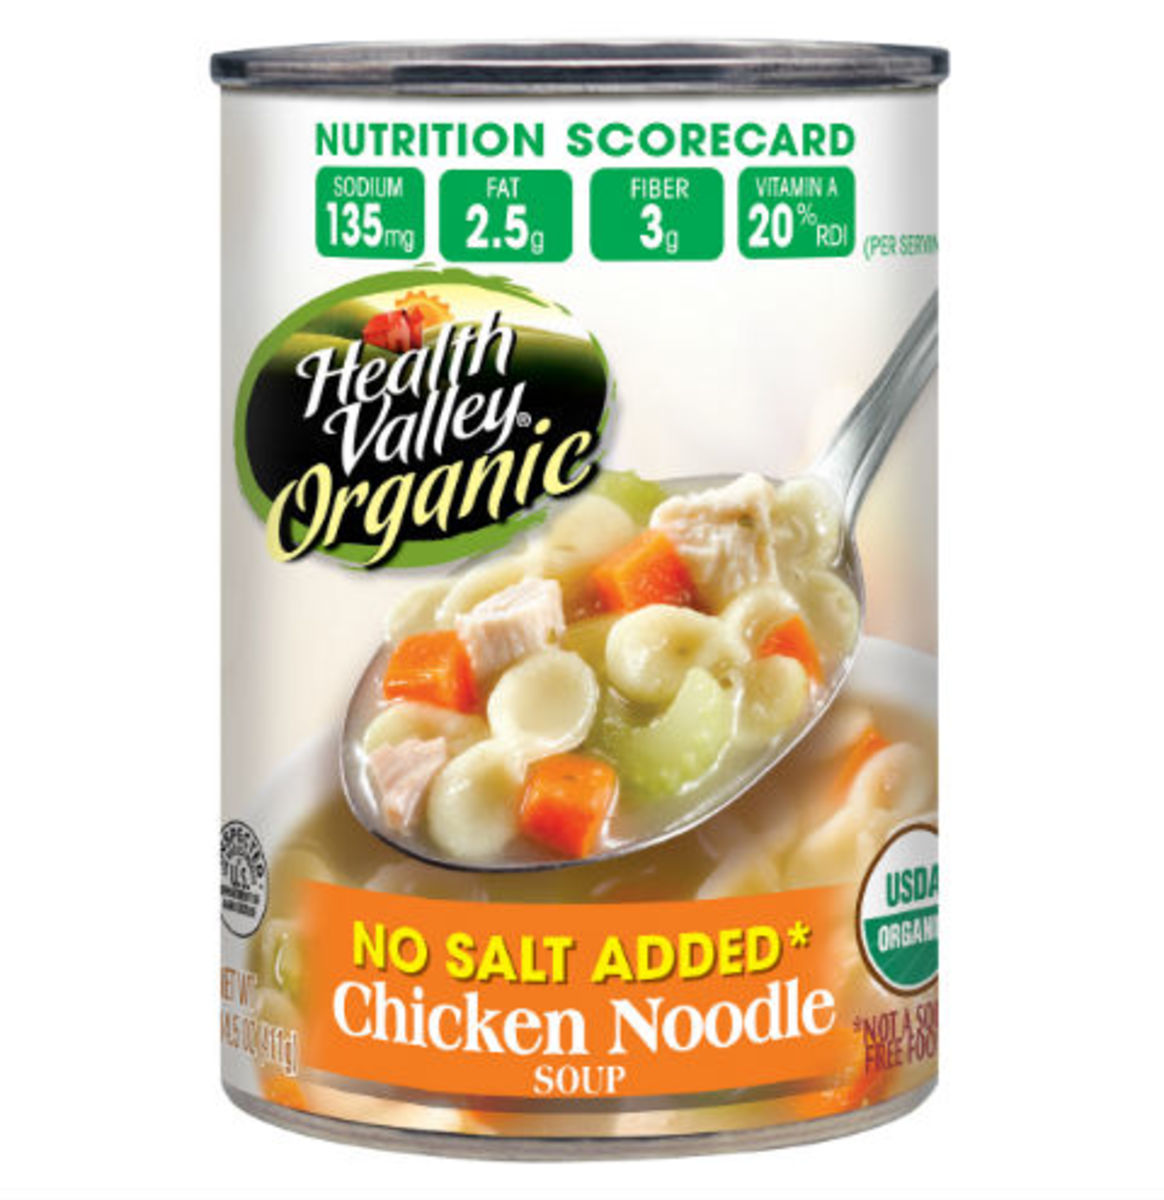 https://www.mensjournal.com/.image/t_share/MTk2MTM2MjQ1MDg5NDEyNjEz/7-health-valley-organic-no-salt-added-chicken-noodle.jpg